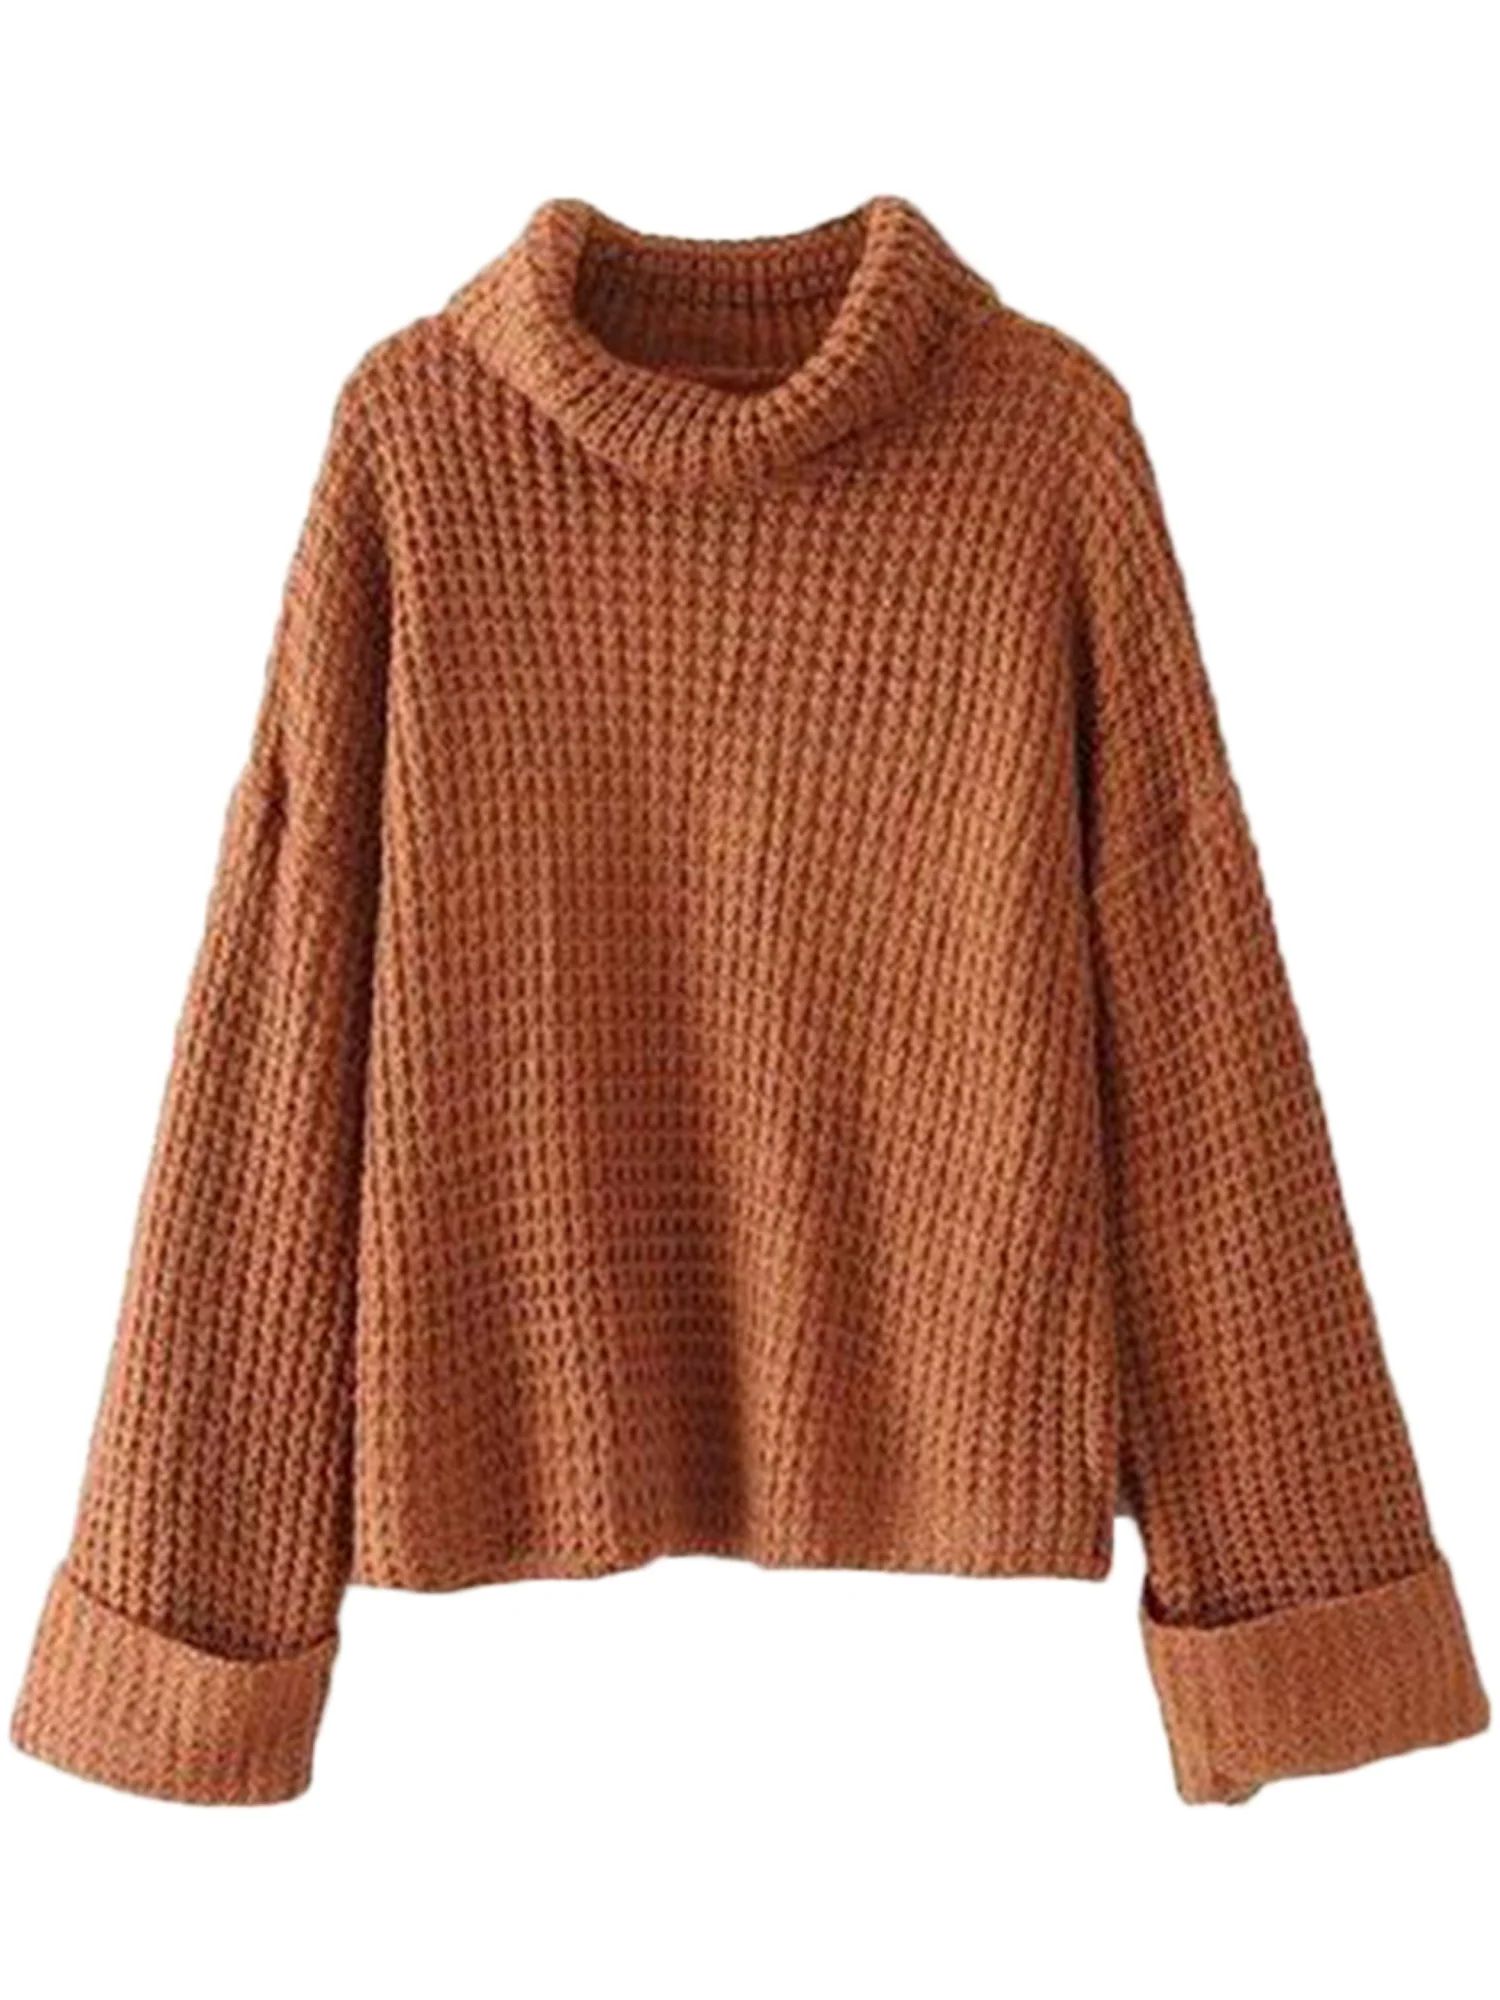 Retta' Cognac Ribbed Turtleneck Sweater | Goodnight Macaroon